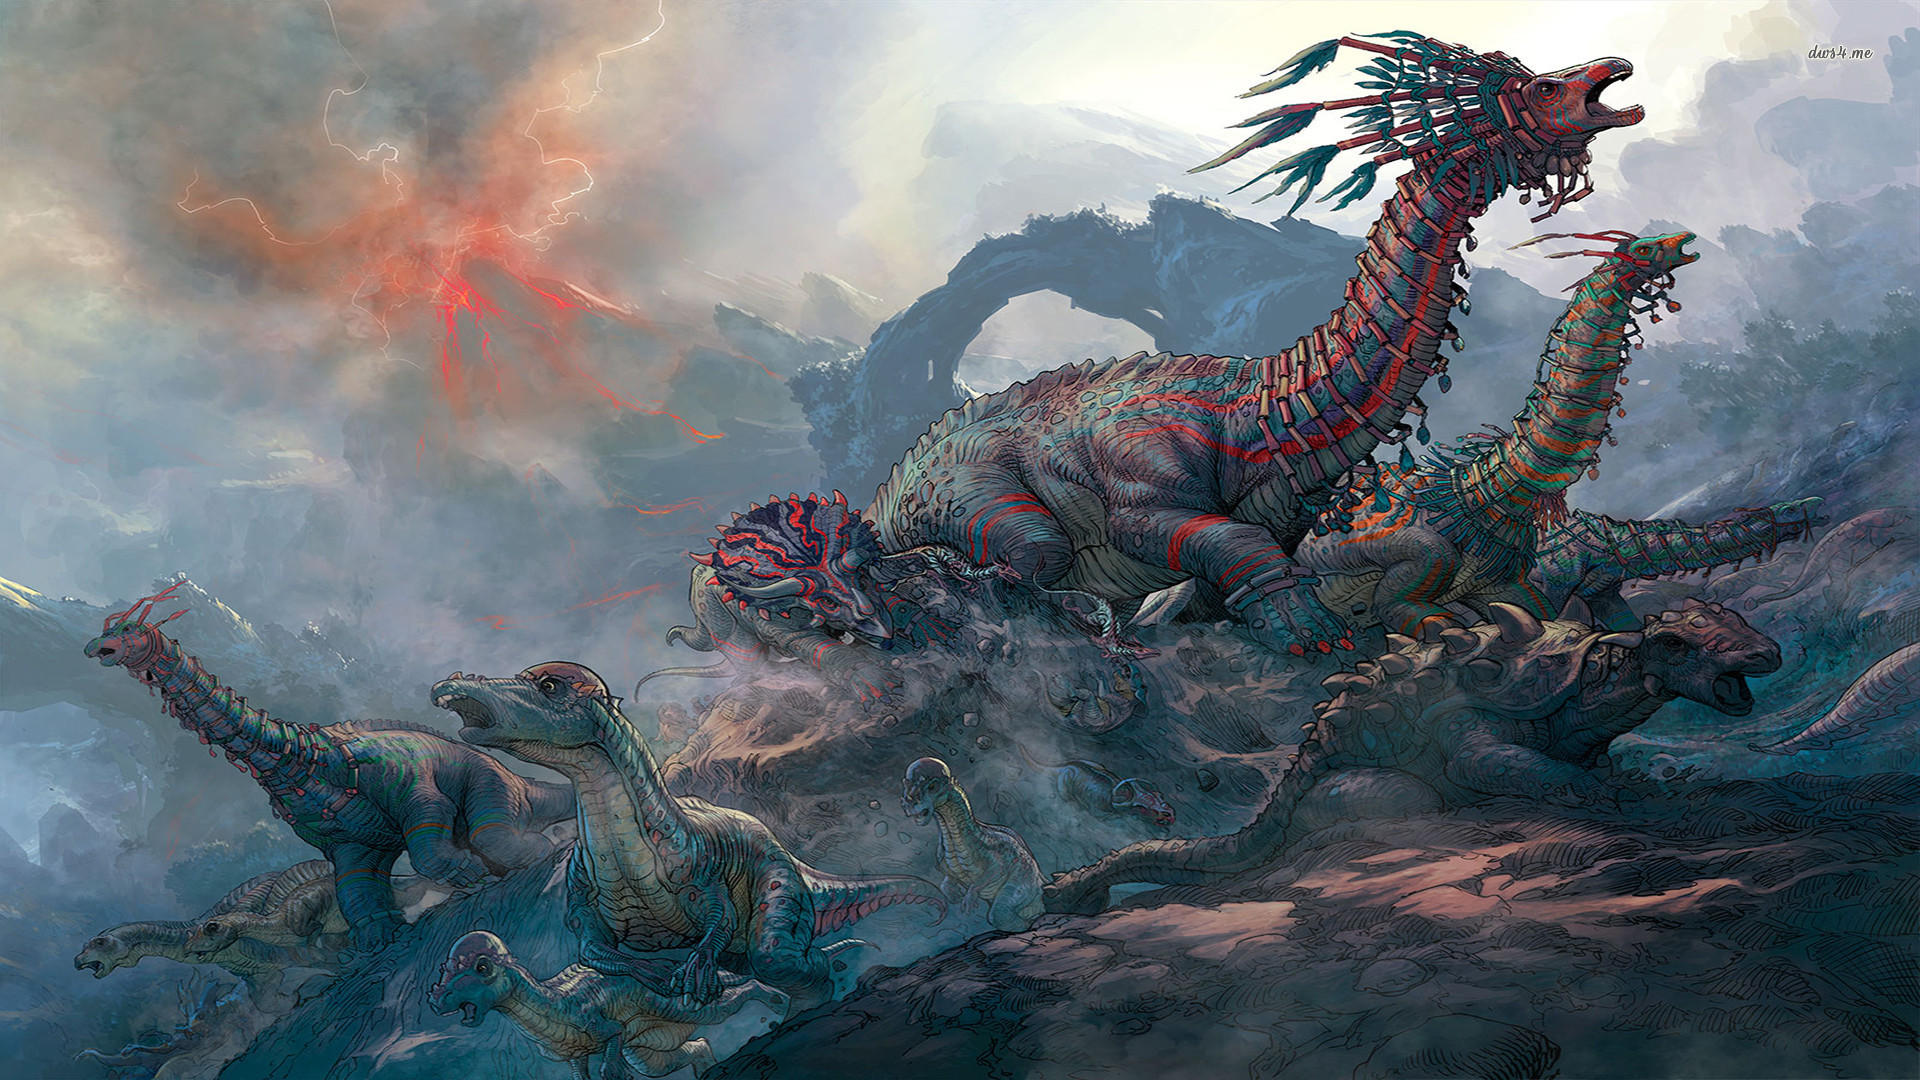 HD Wild Dinosaur Colony 1080p Wallpaper Full Size - HiReWallpapers ...